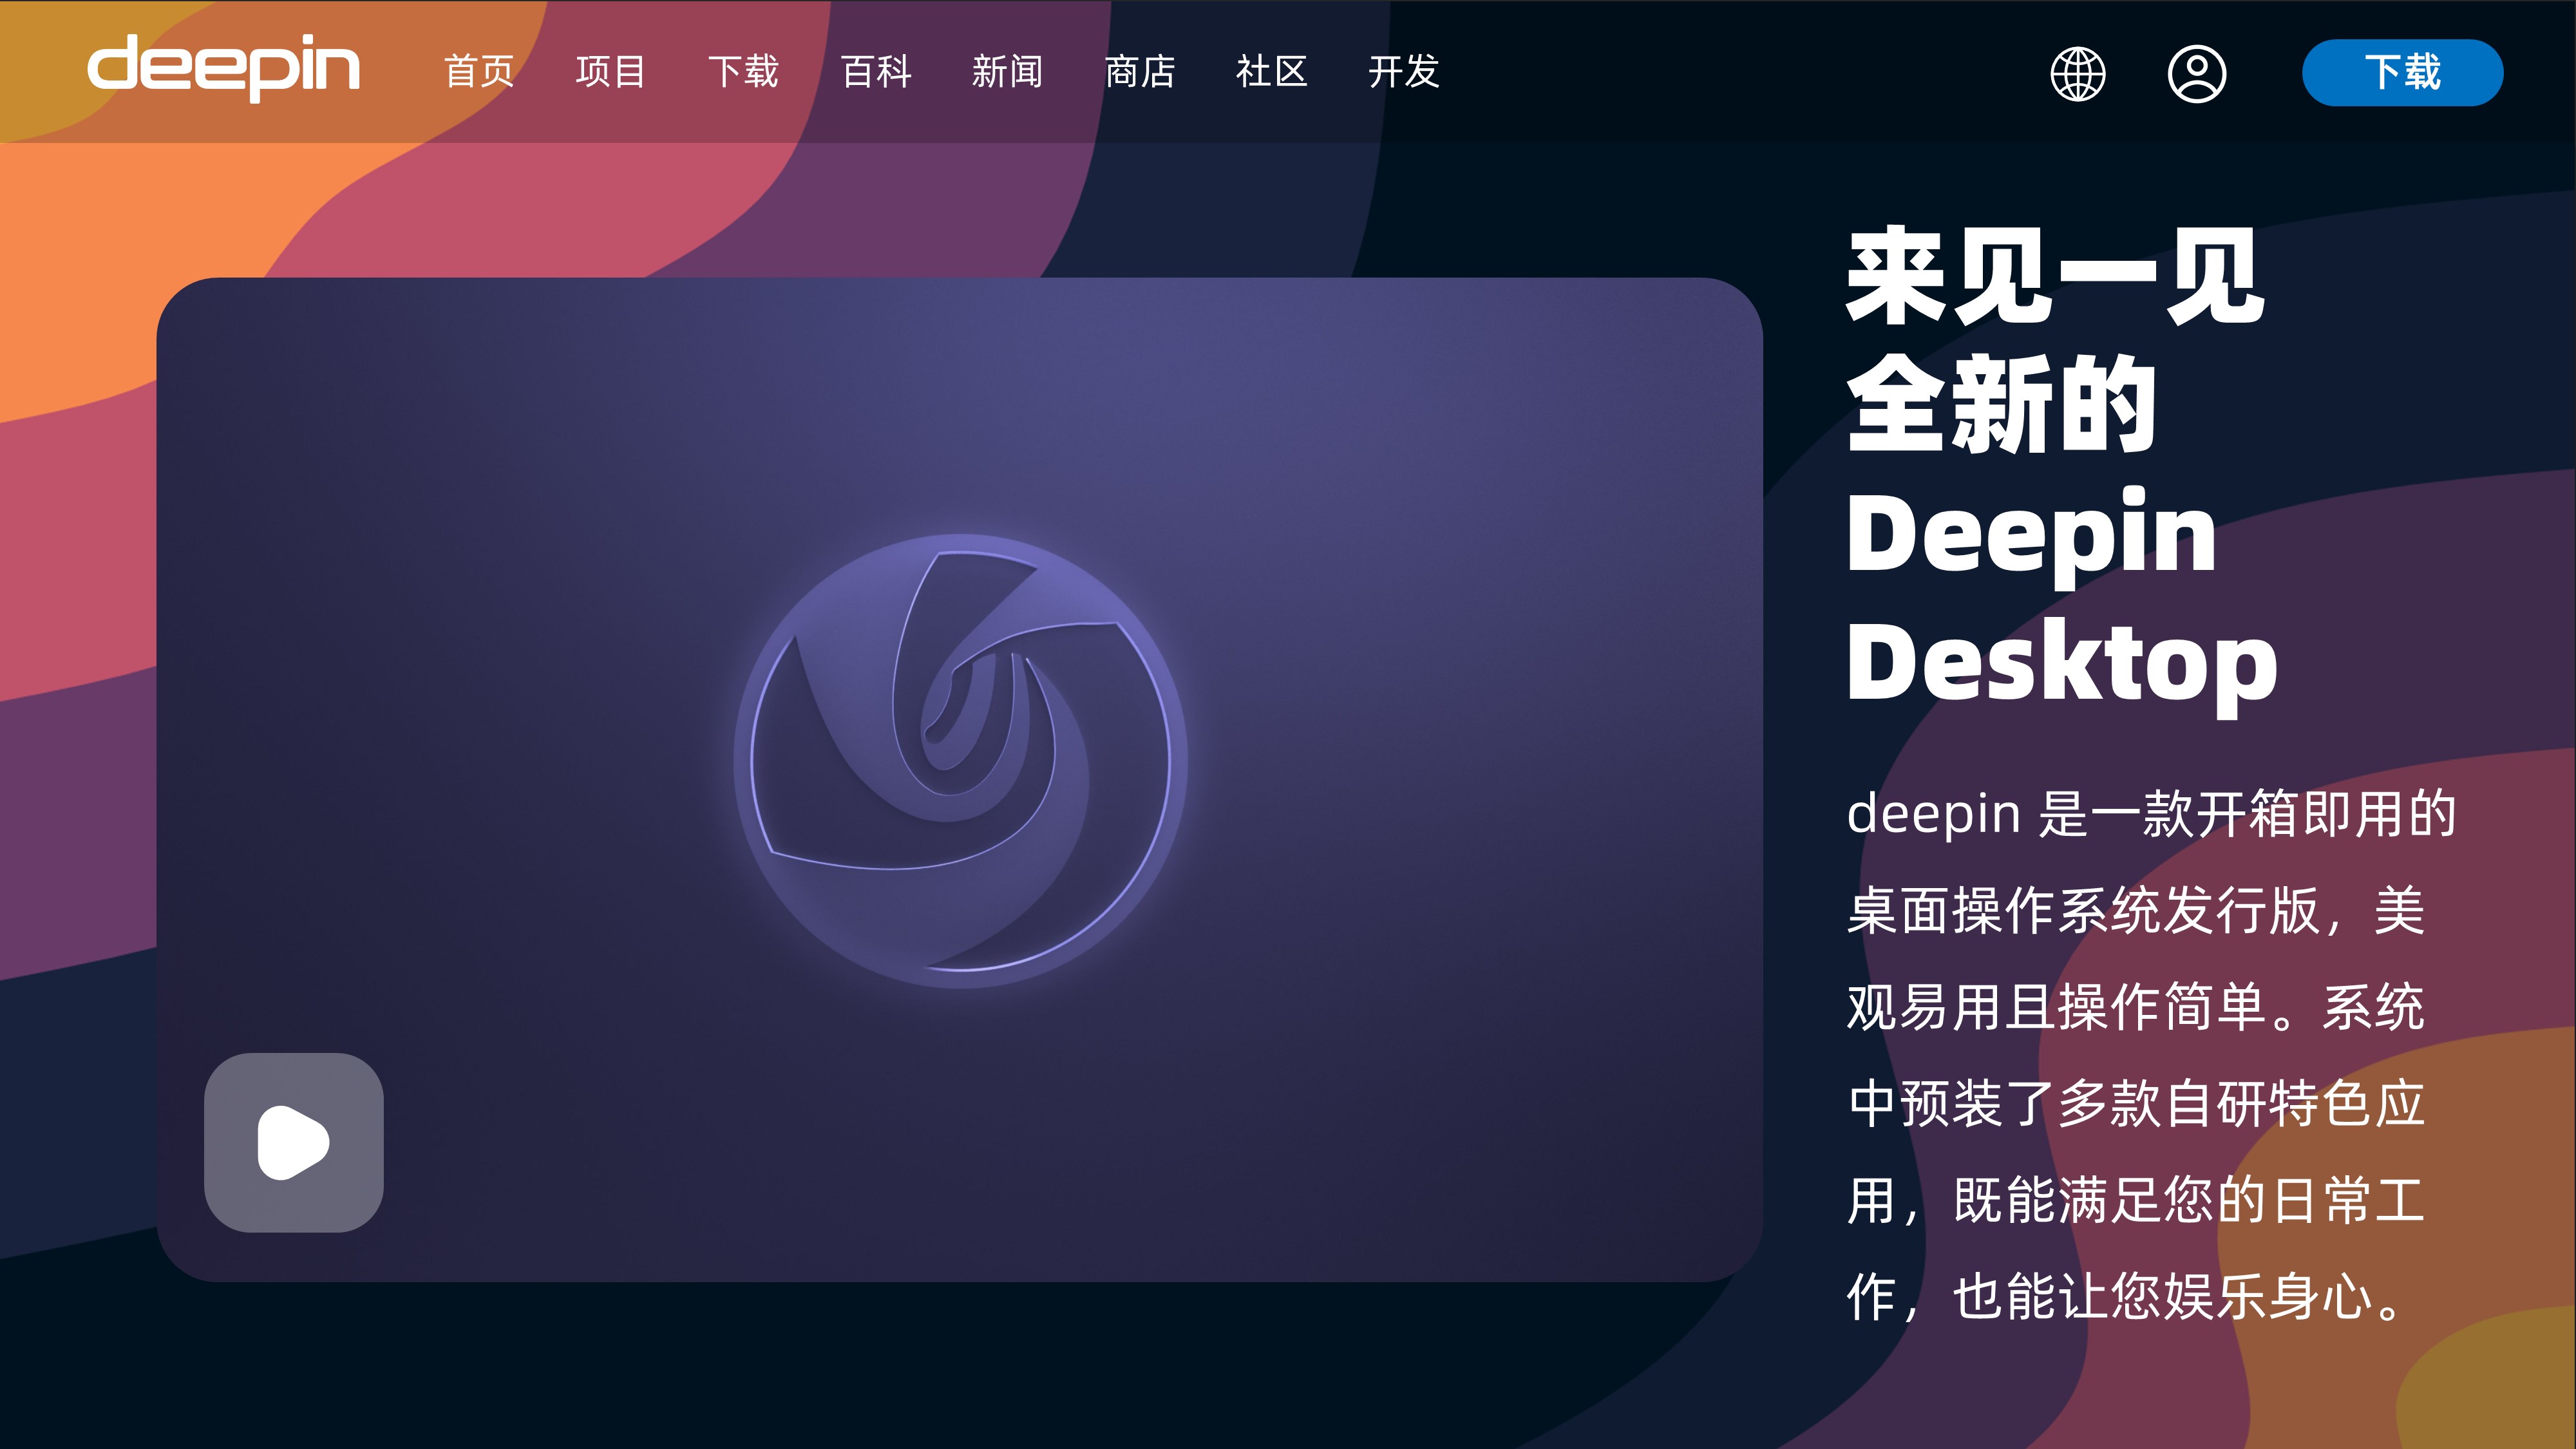 deepin-website_3.jpg